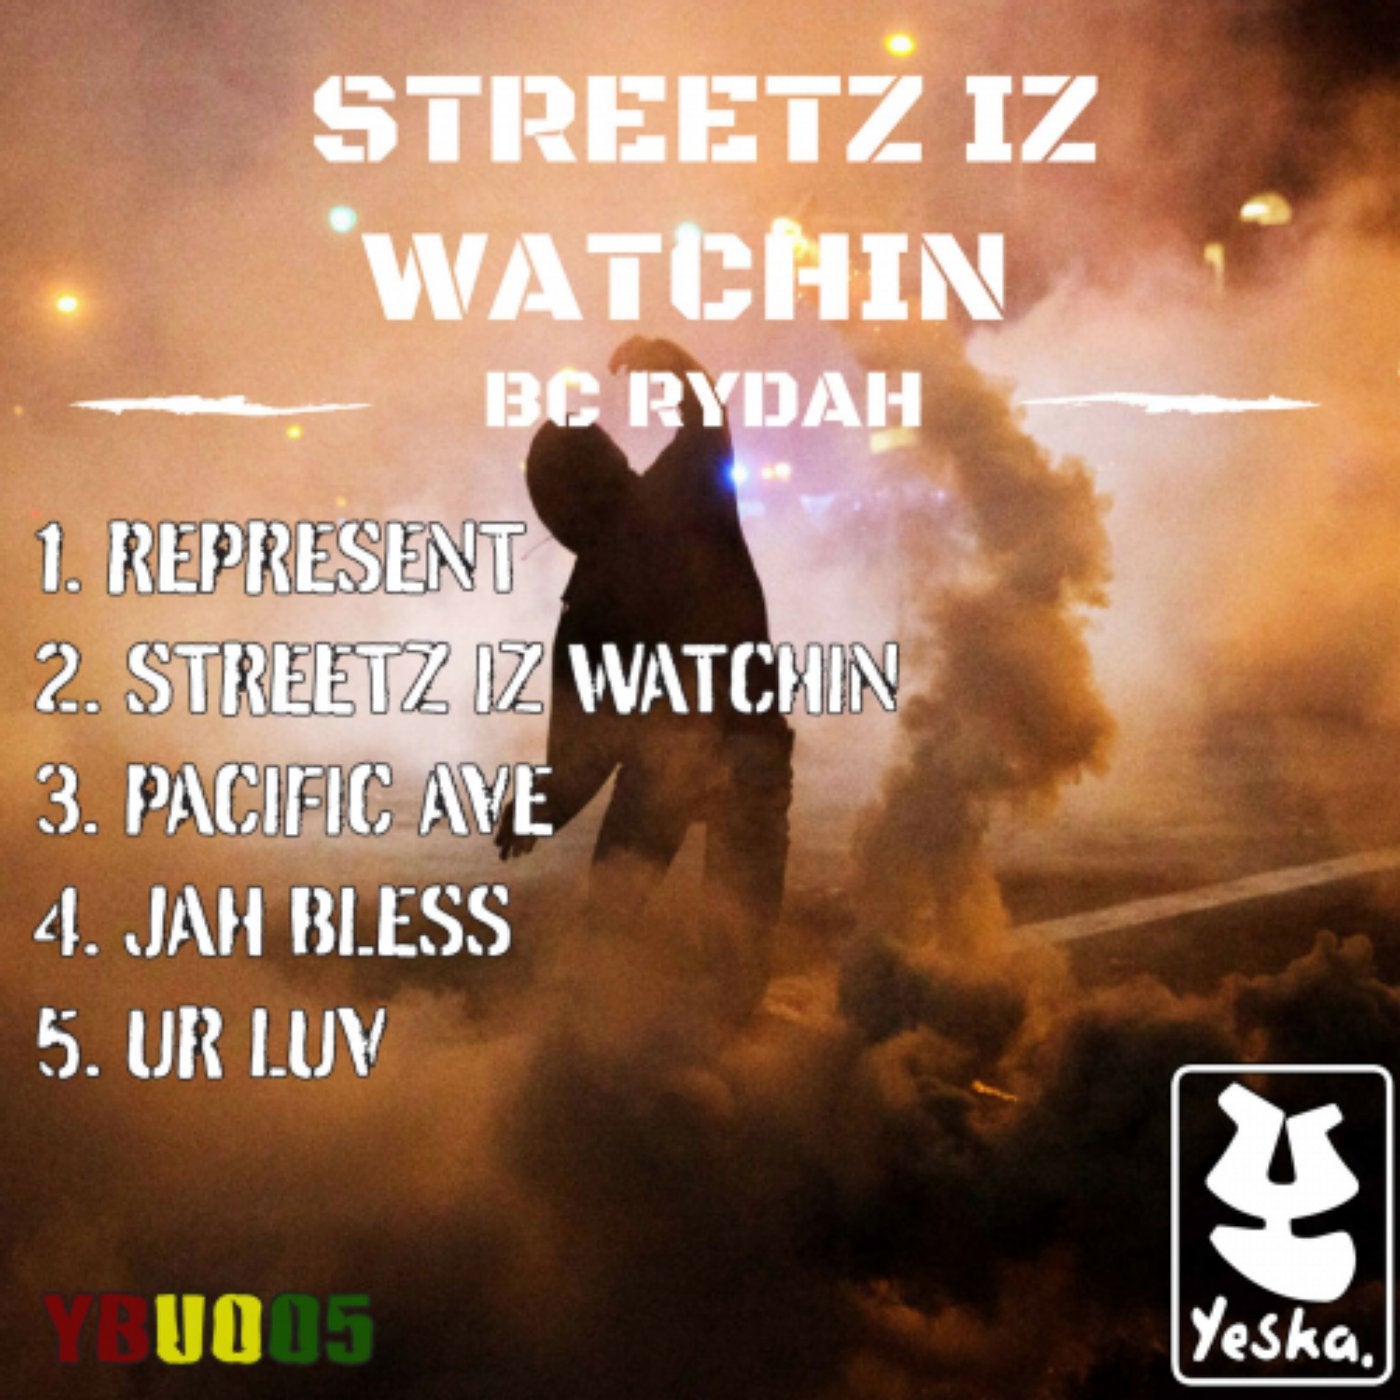 Streetz Iz Watchin